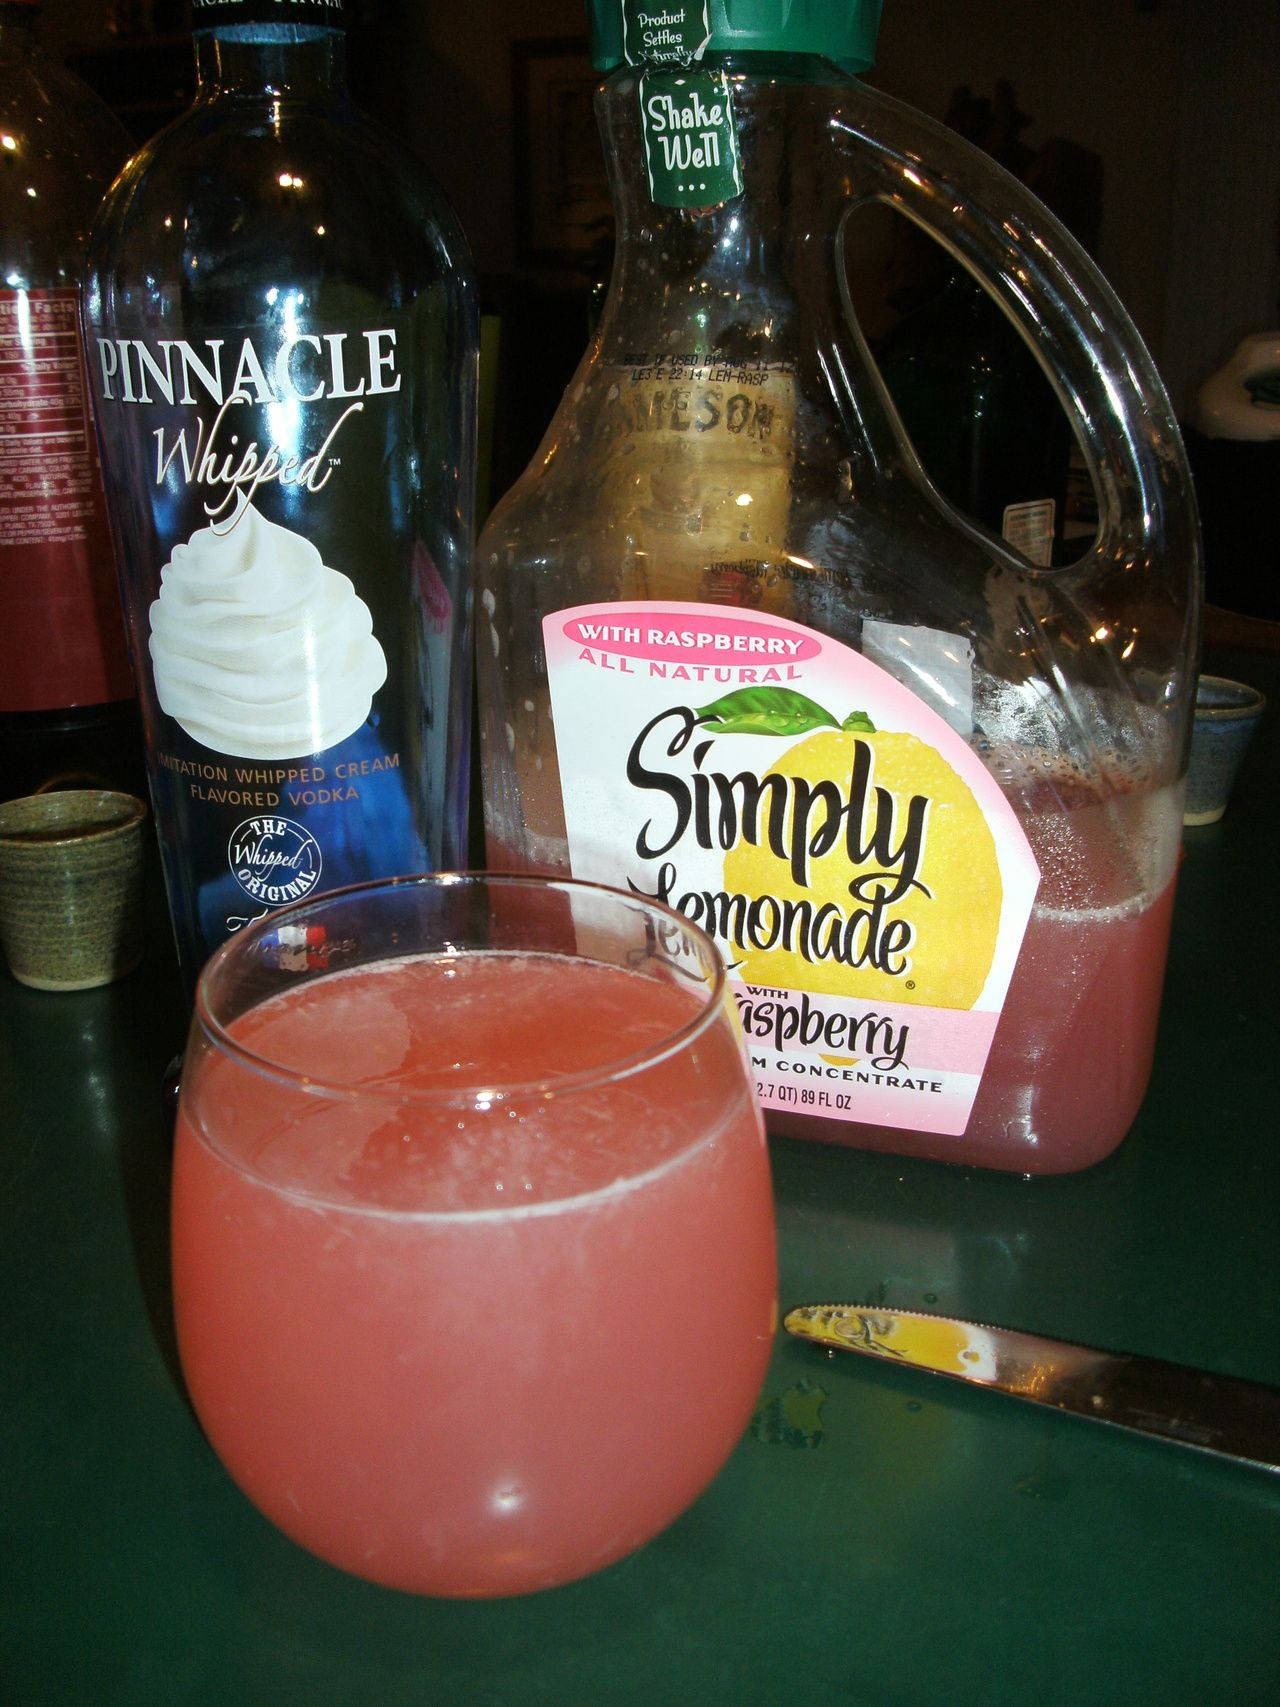 Pinnacle Vodka Mixed With Raspberry Lemonade Wallpaper